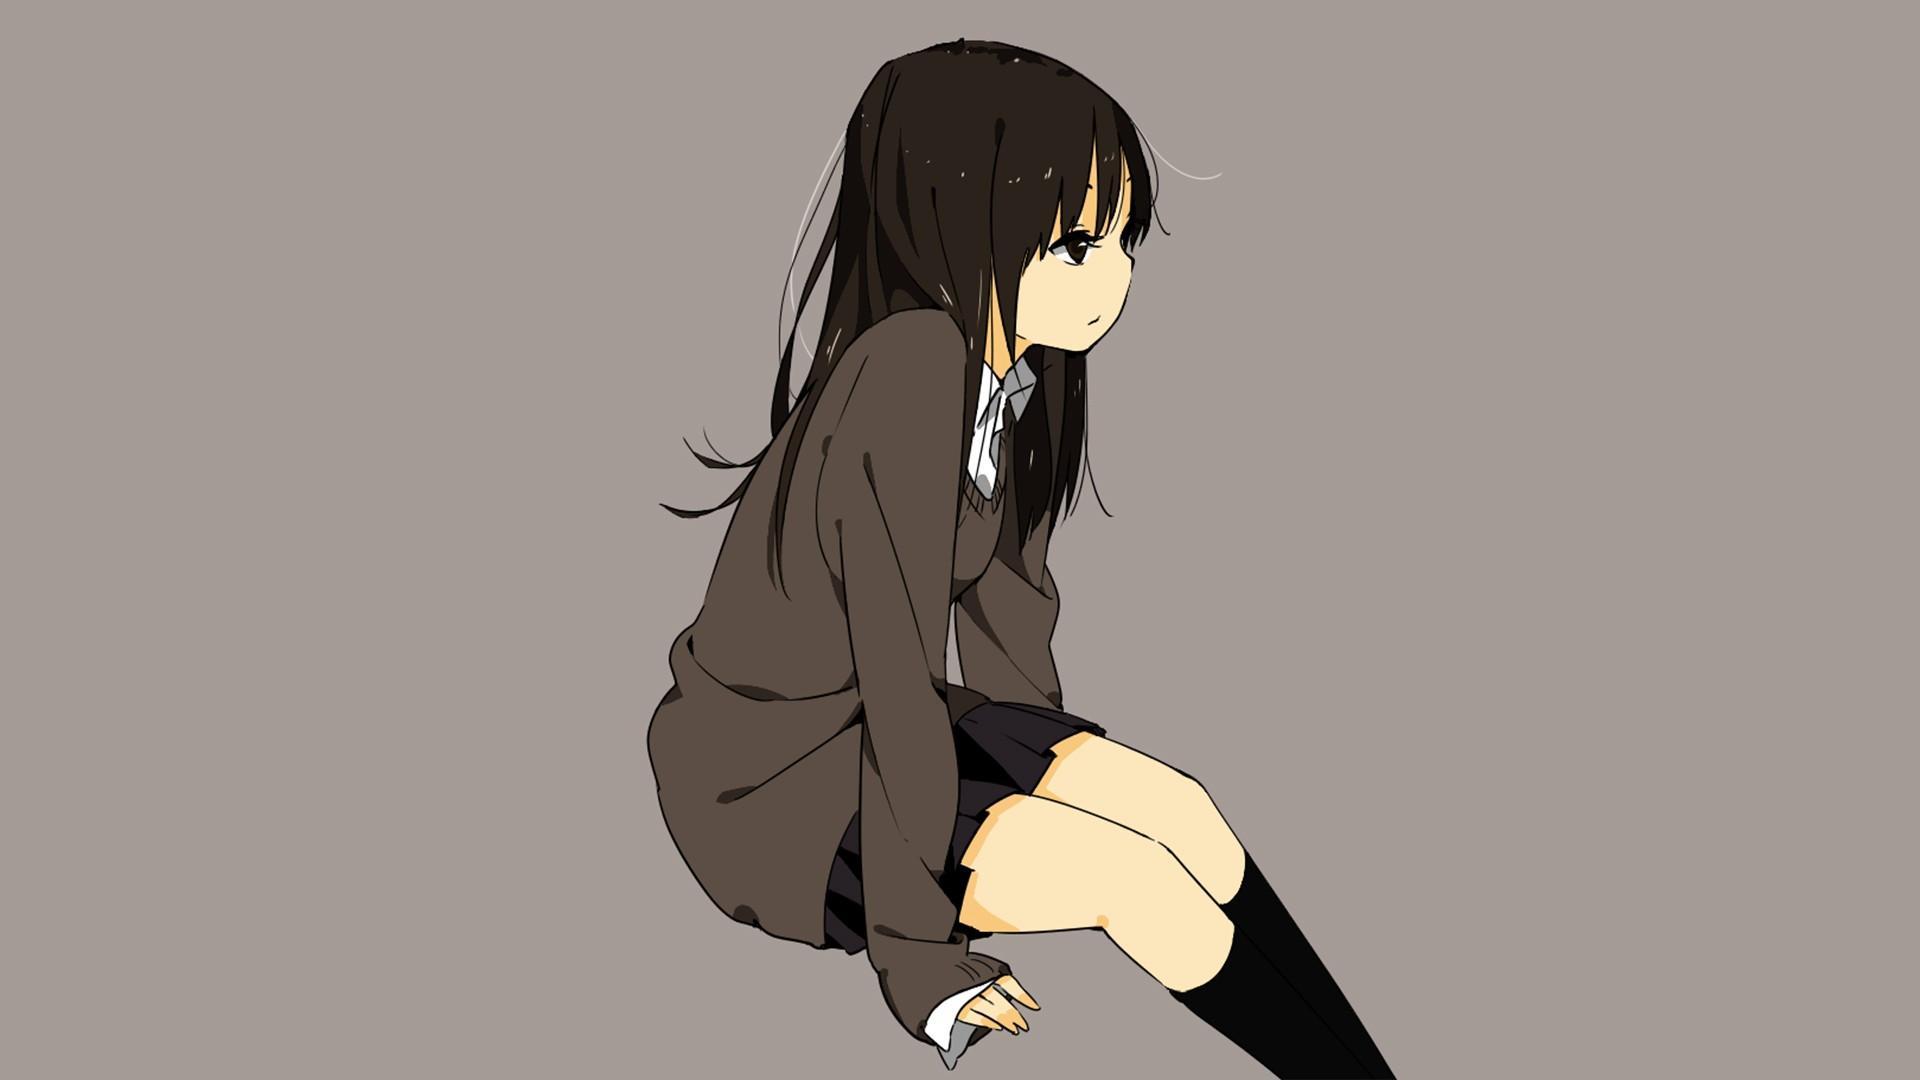 Aesthetic Sad Anime Girl Wallpapers - Top Free Aesthetic Sad Anime Girl Backgrounds